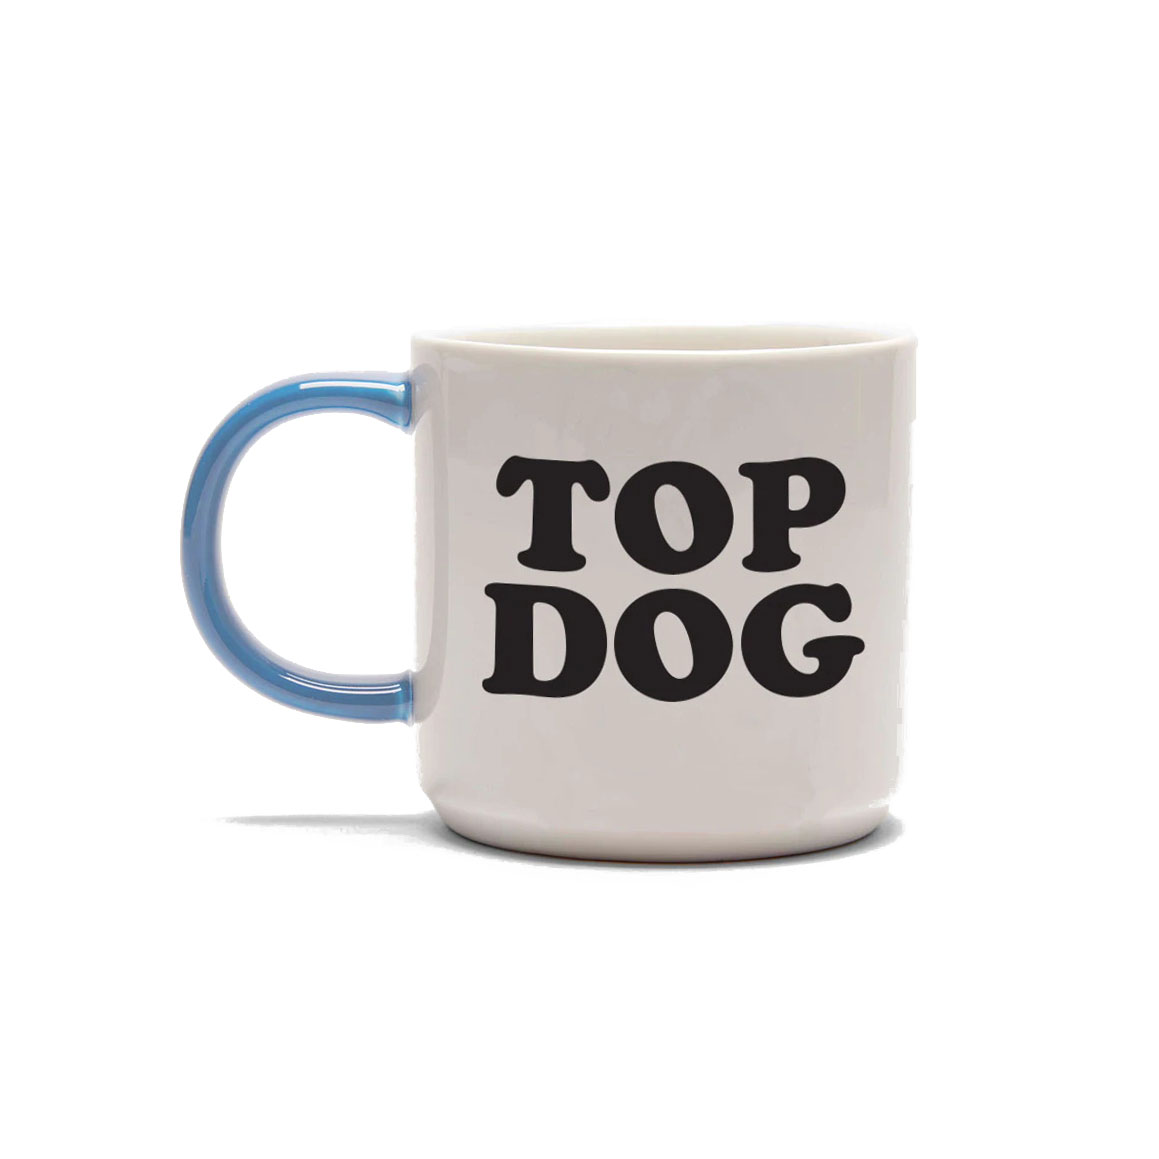 Magpie X Peanuts Top Dog Mug - White/Blue